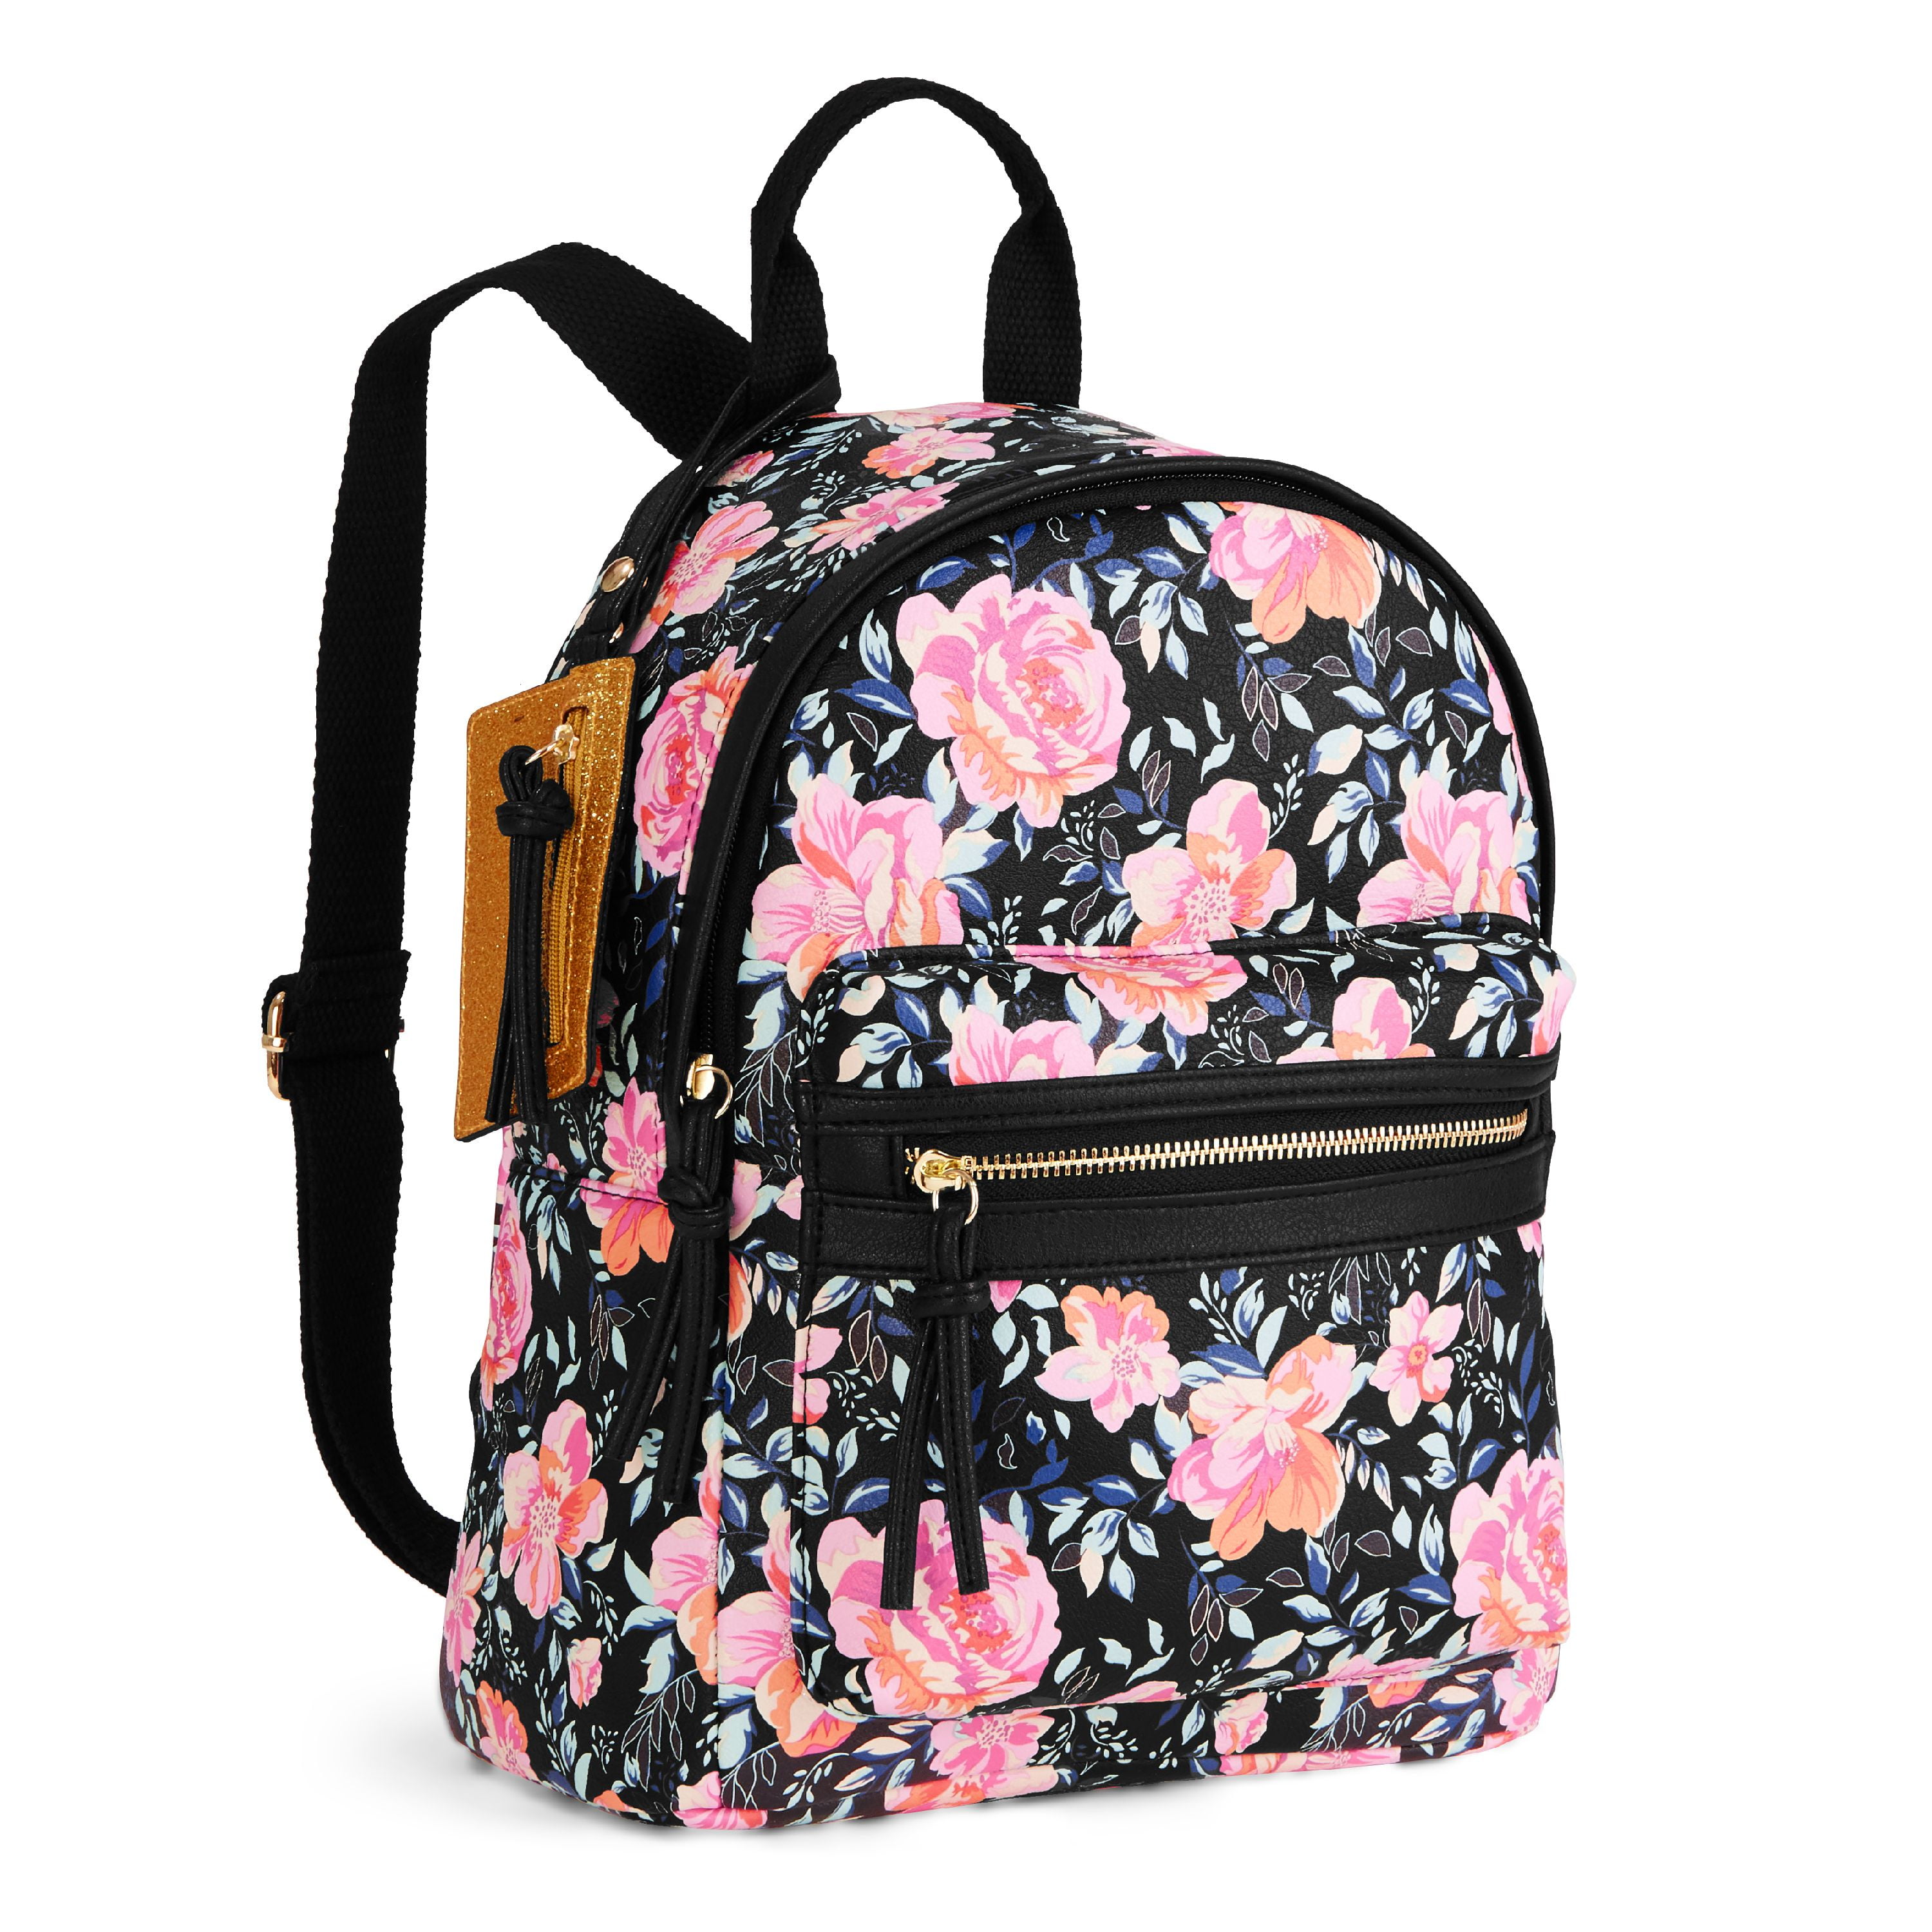 Black Floral Mini Dome Backpack – Walmart Inventory Checker – BrickSeek